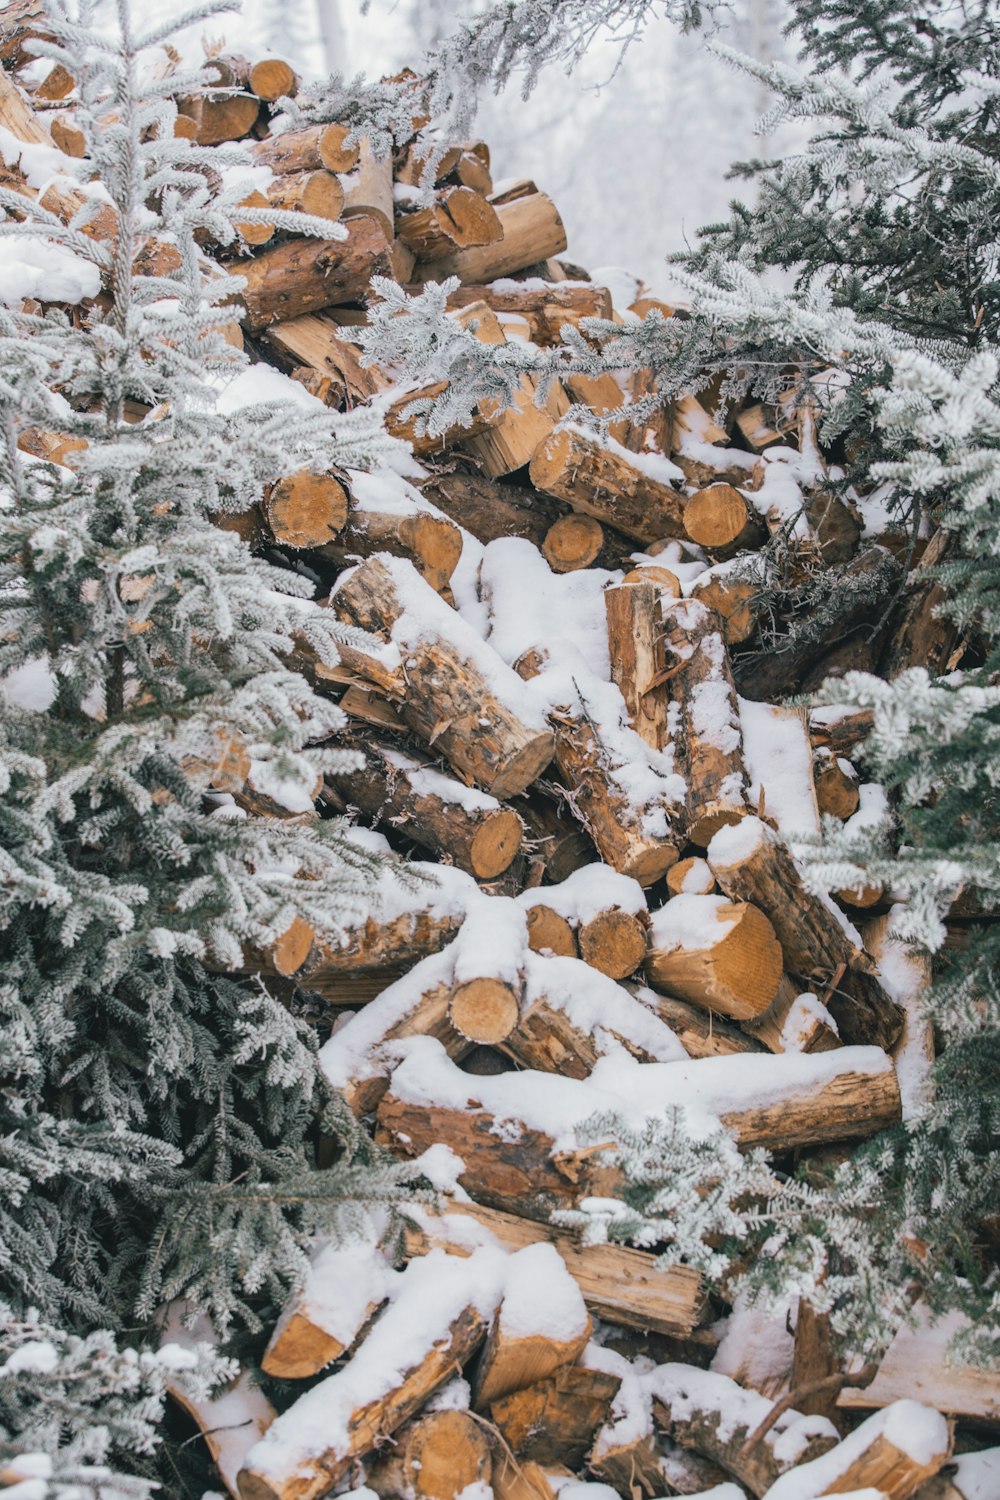 rochas marrons e cinzentas no solo coberto de neve